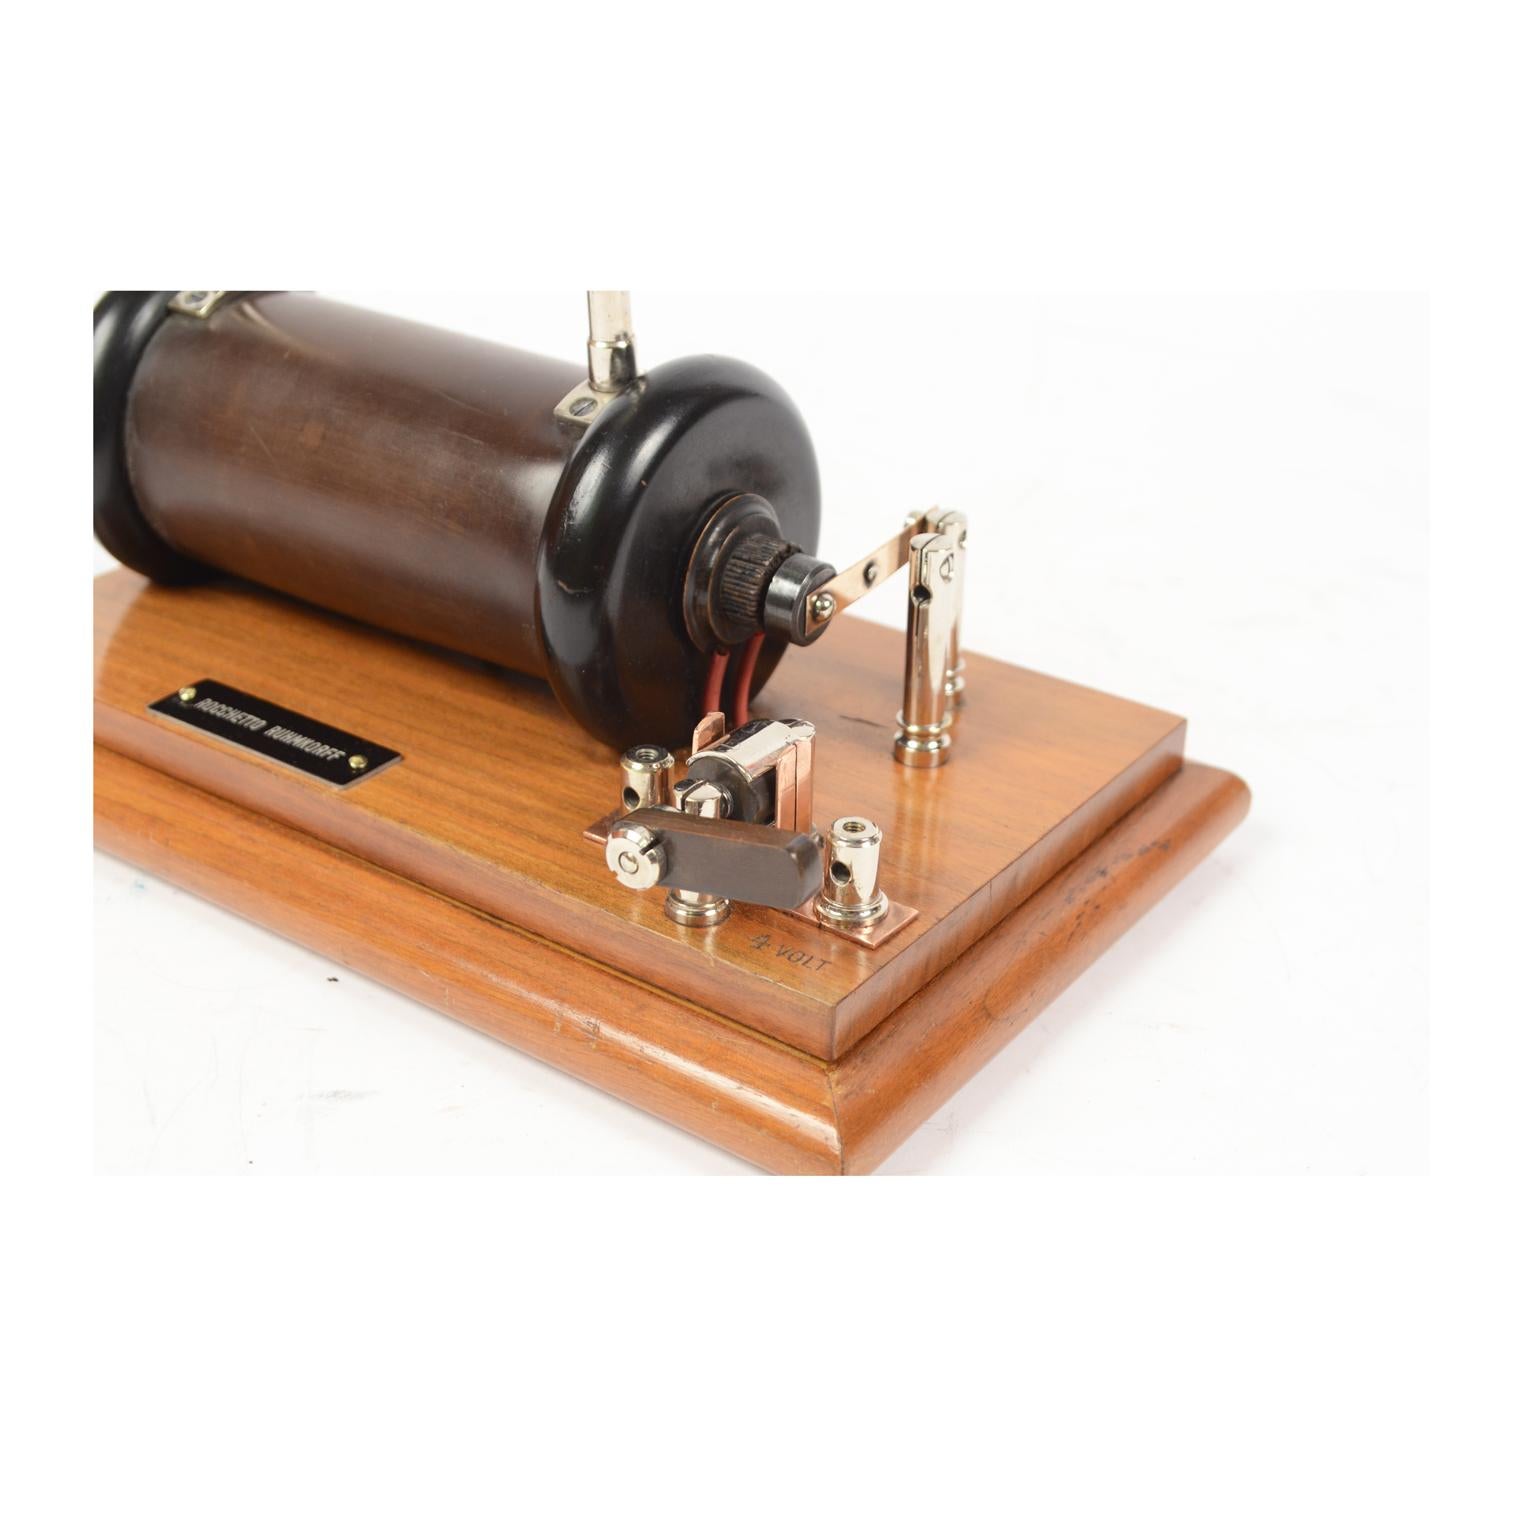 Italian 1850 Induction Spool or Ruhmkorff Spool Antique Physic Measuring Instrument 